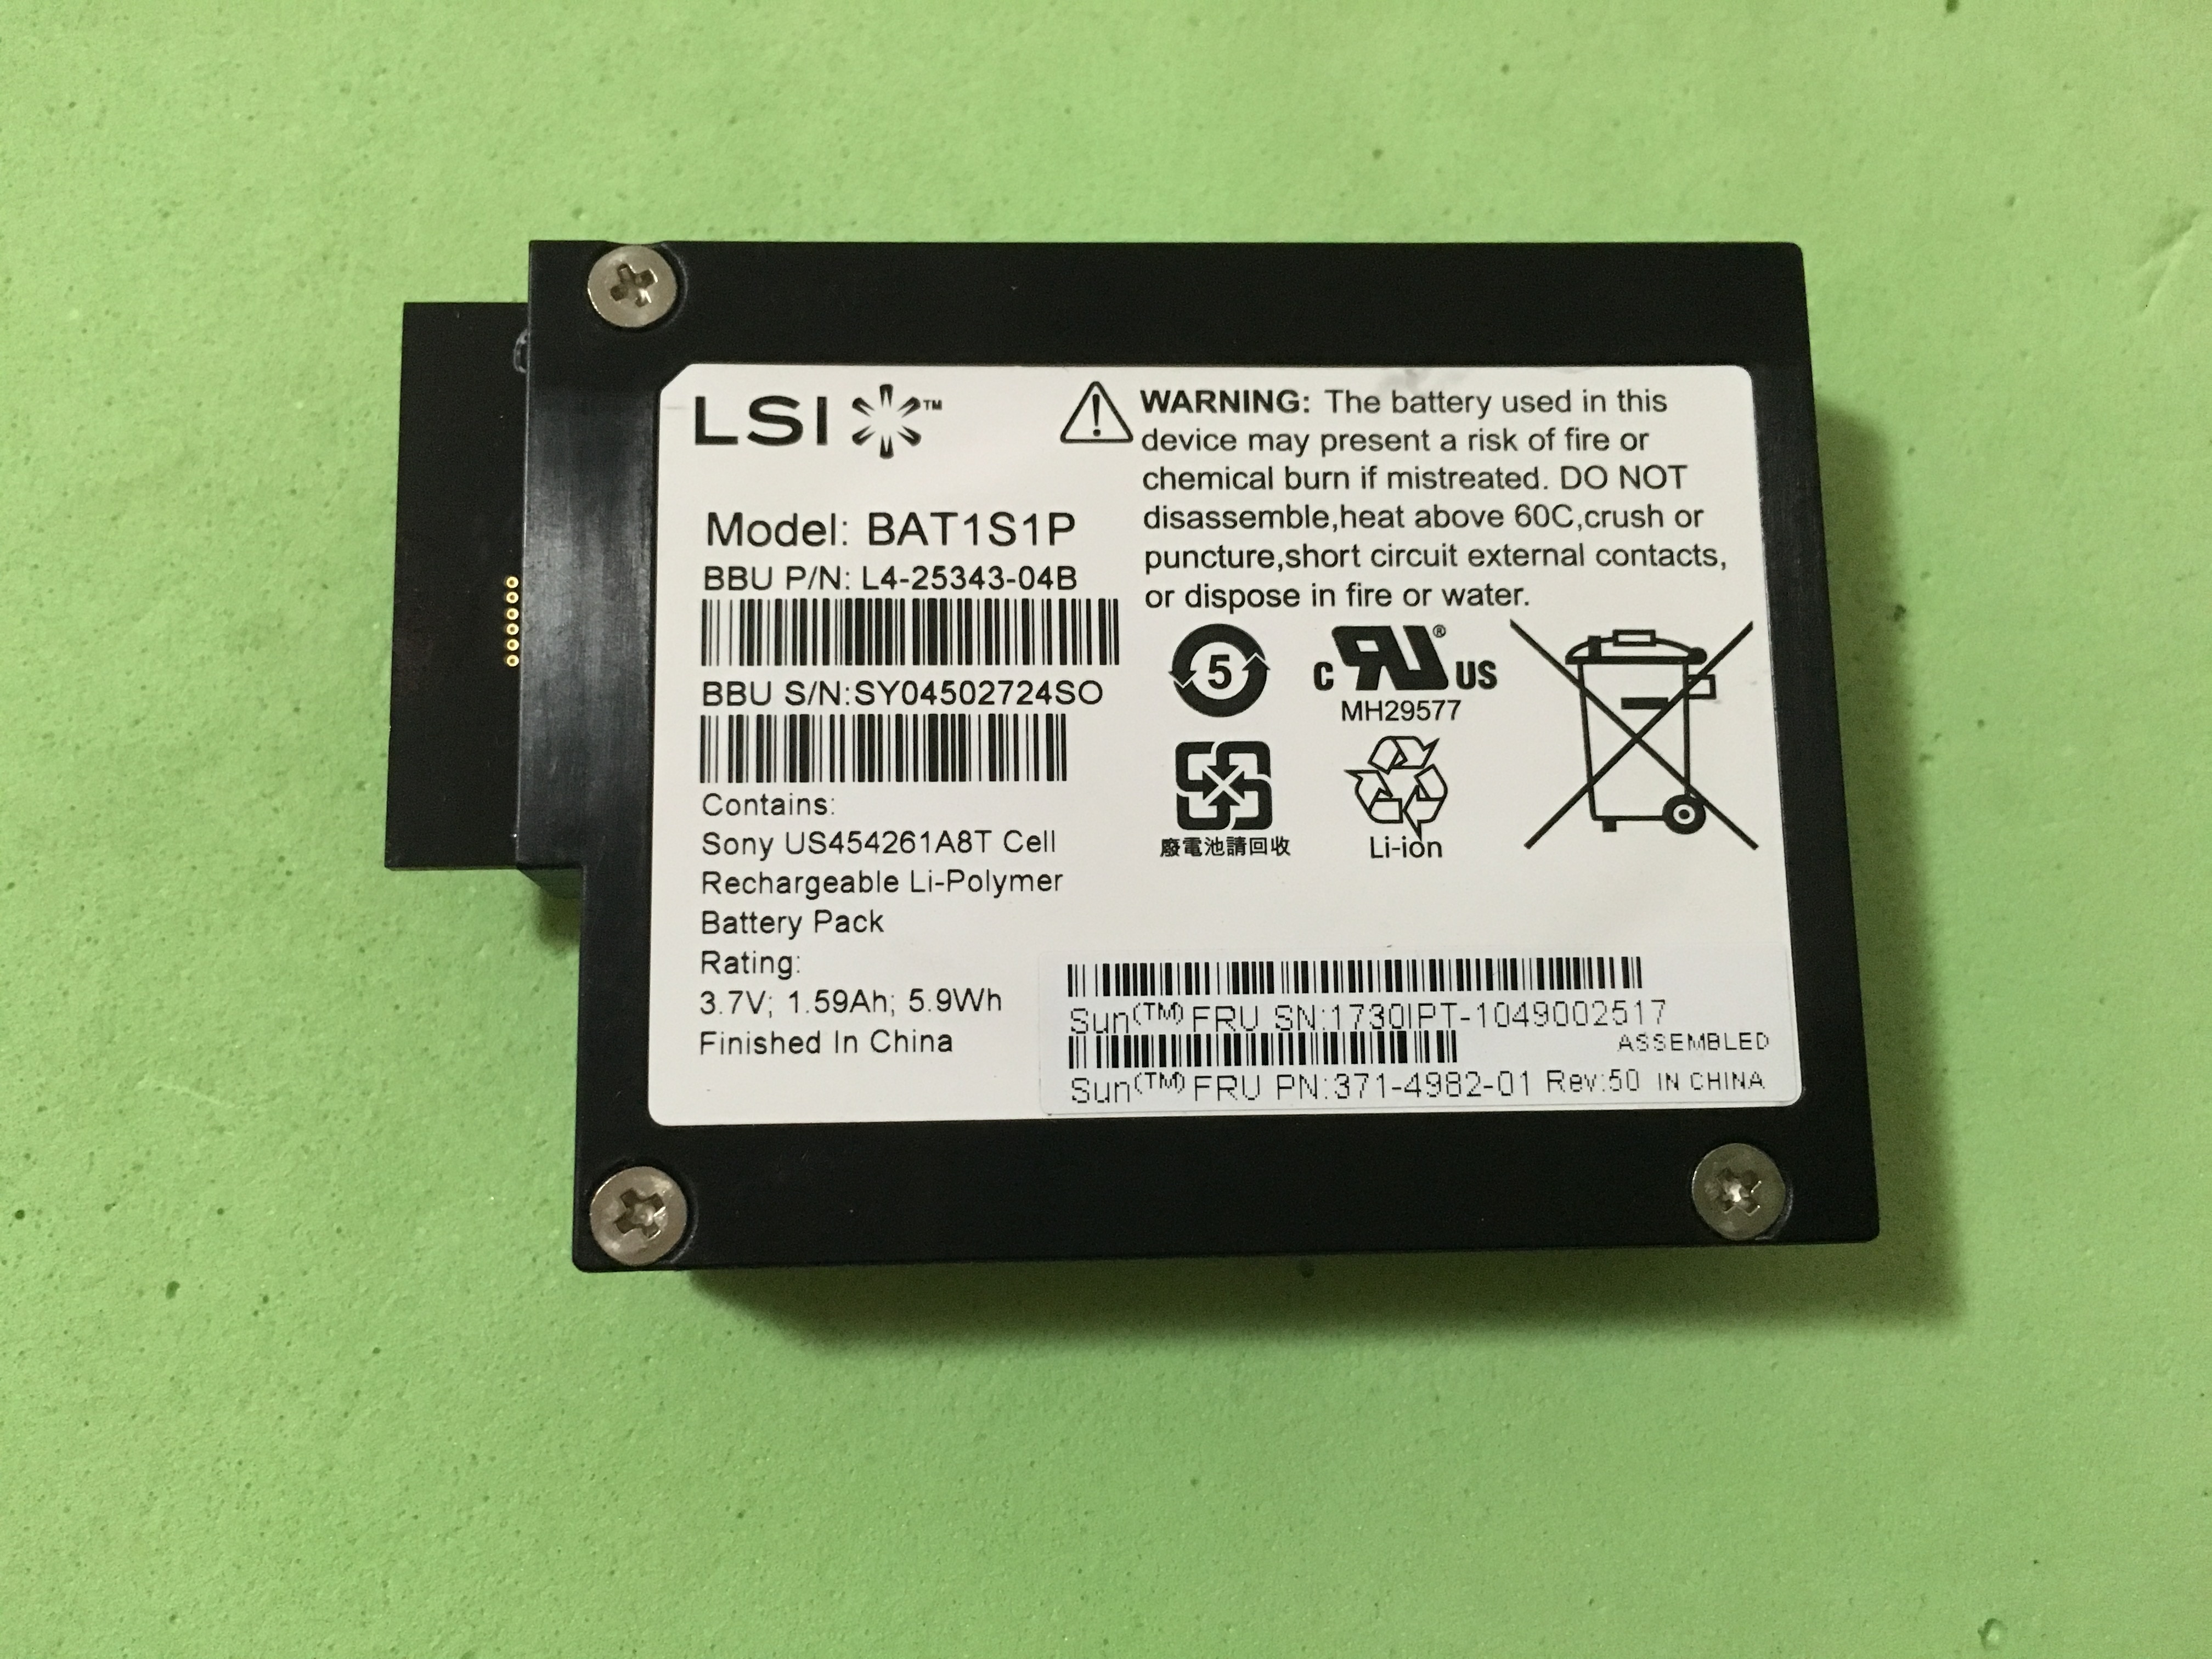 LSI MegaRAID Lsi BBU08 battery BBU For LSI 9260 9261 9280 controller raid card